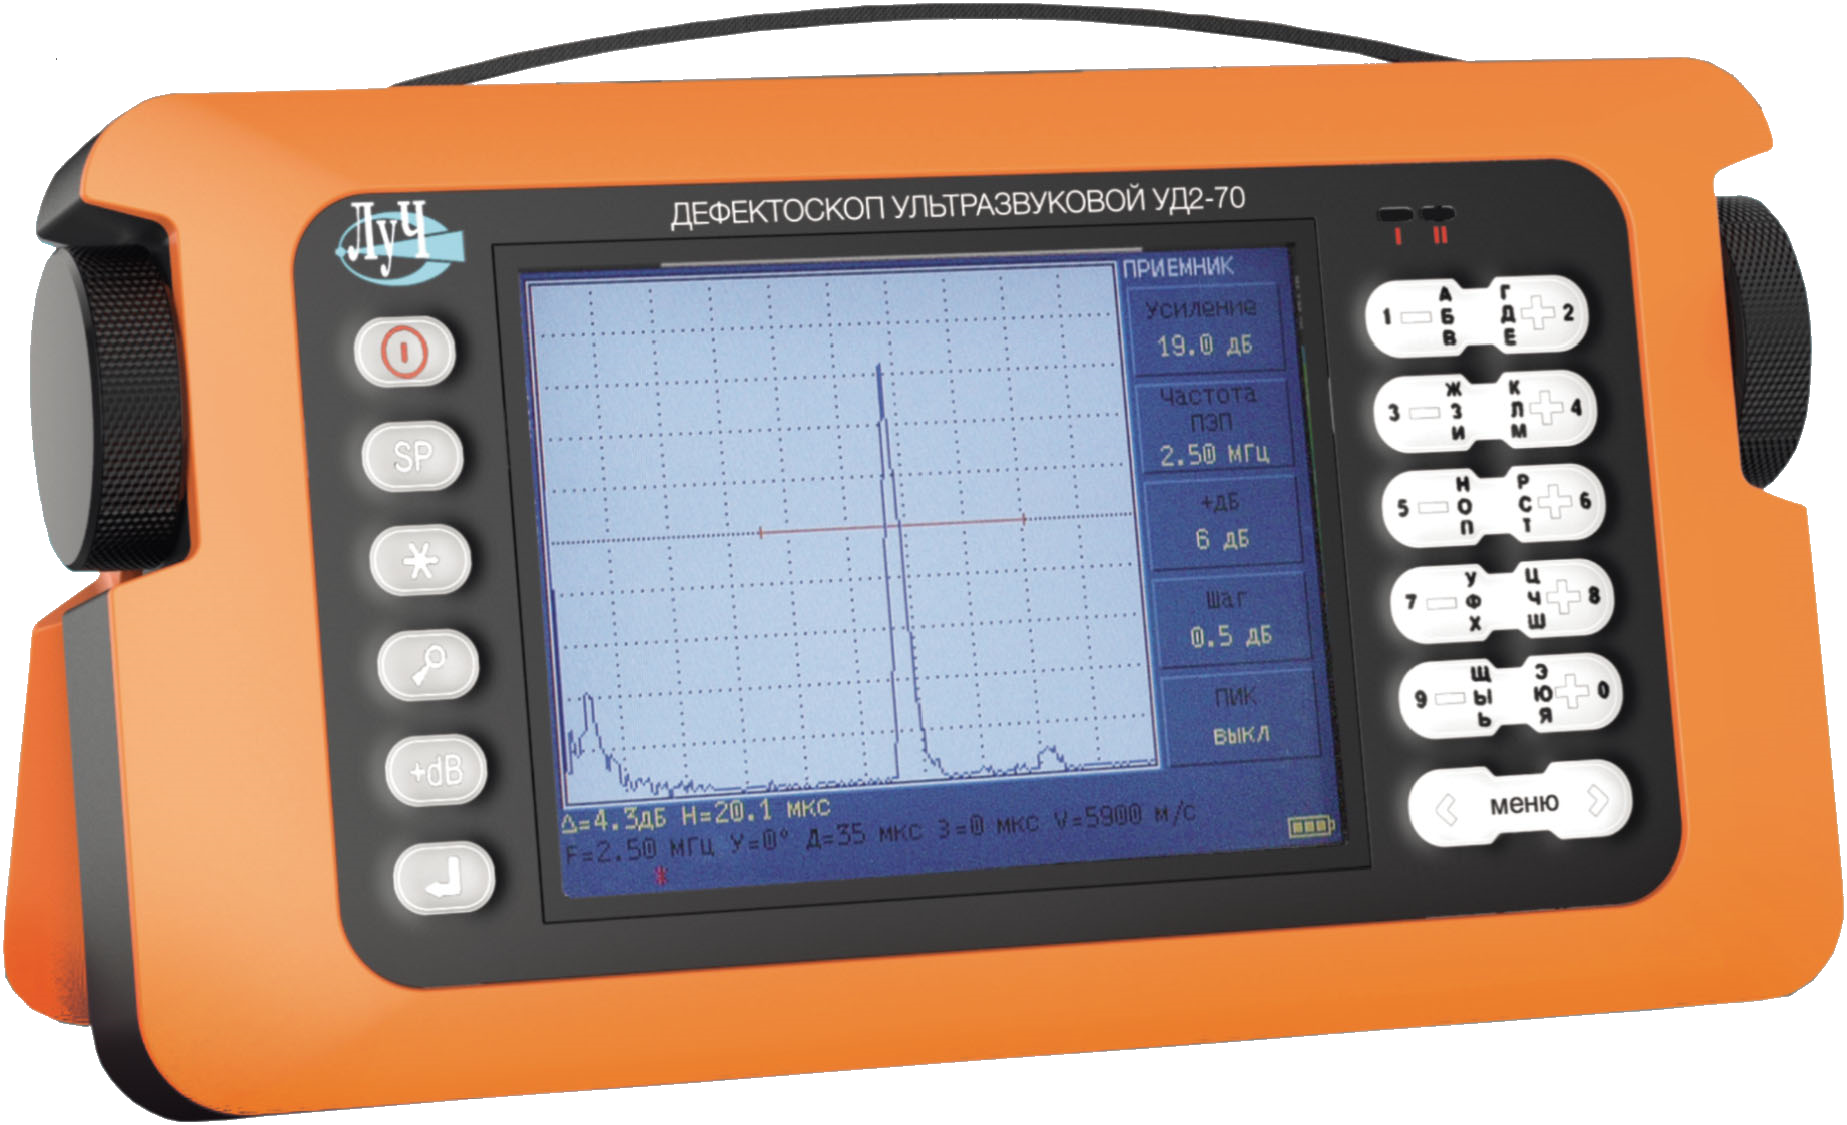 Ultrasonic flaw detector UD2-70